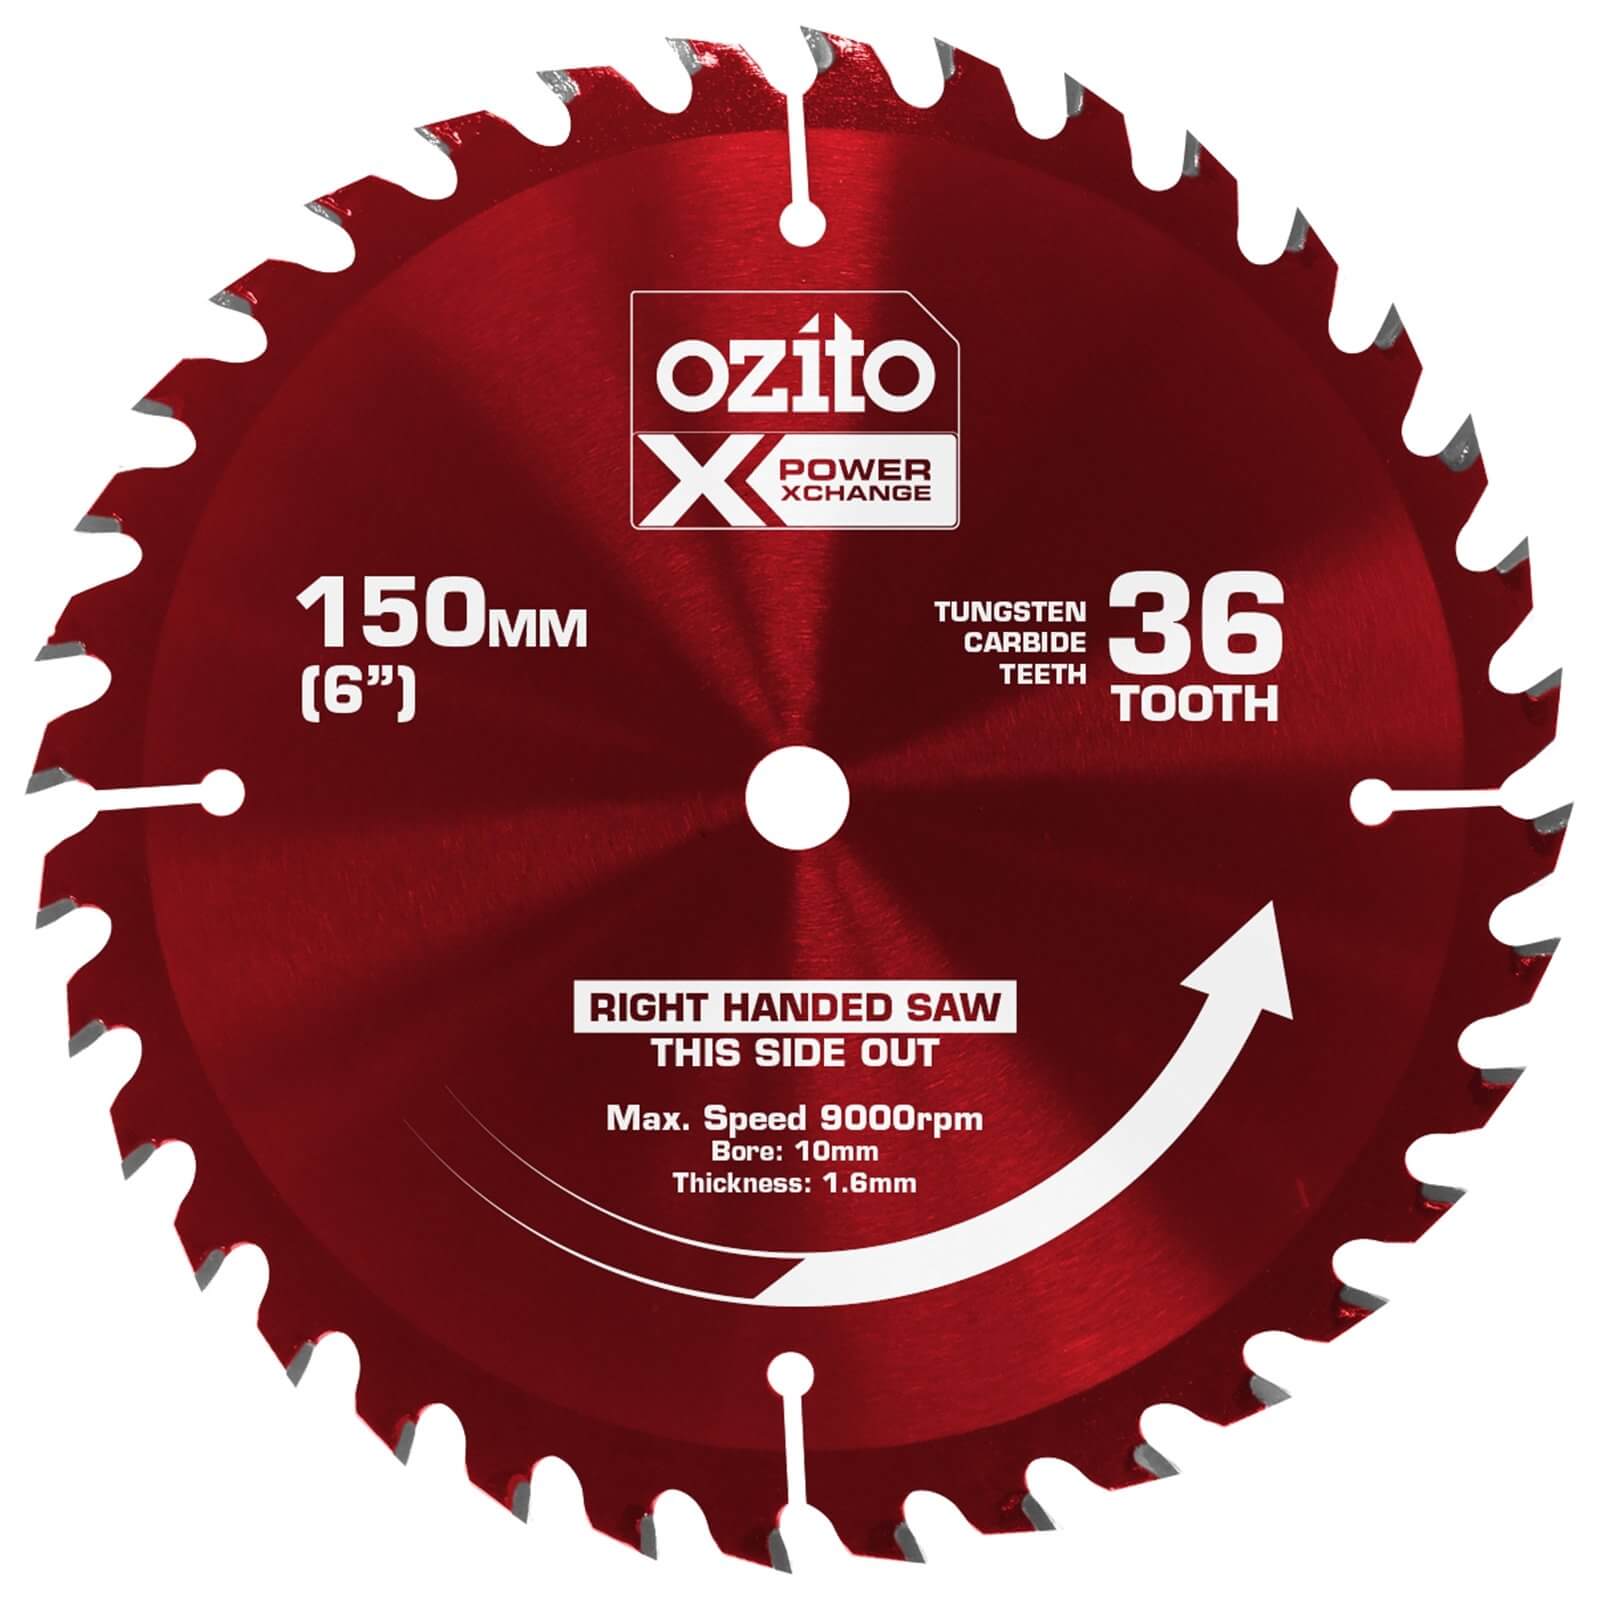 Ozito by Einhell Power X Change 150mm 36 Tooth Circular Saw Blade